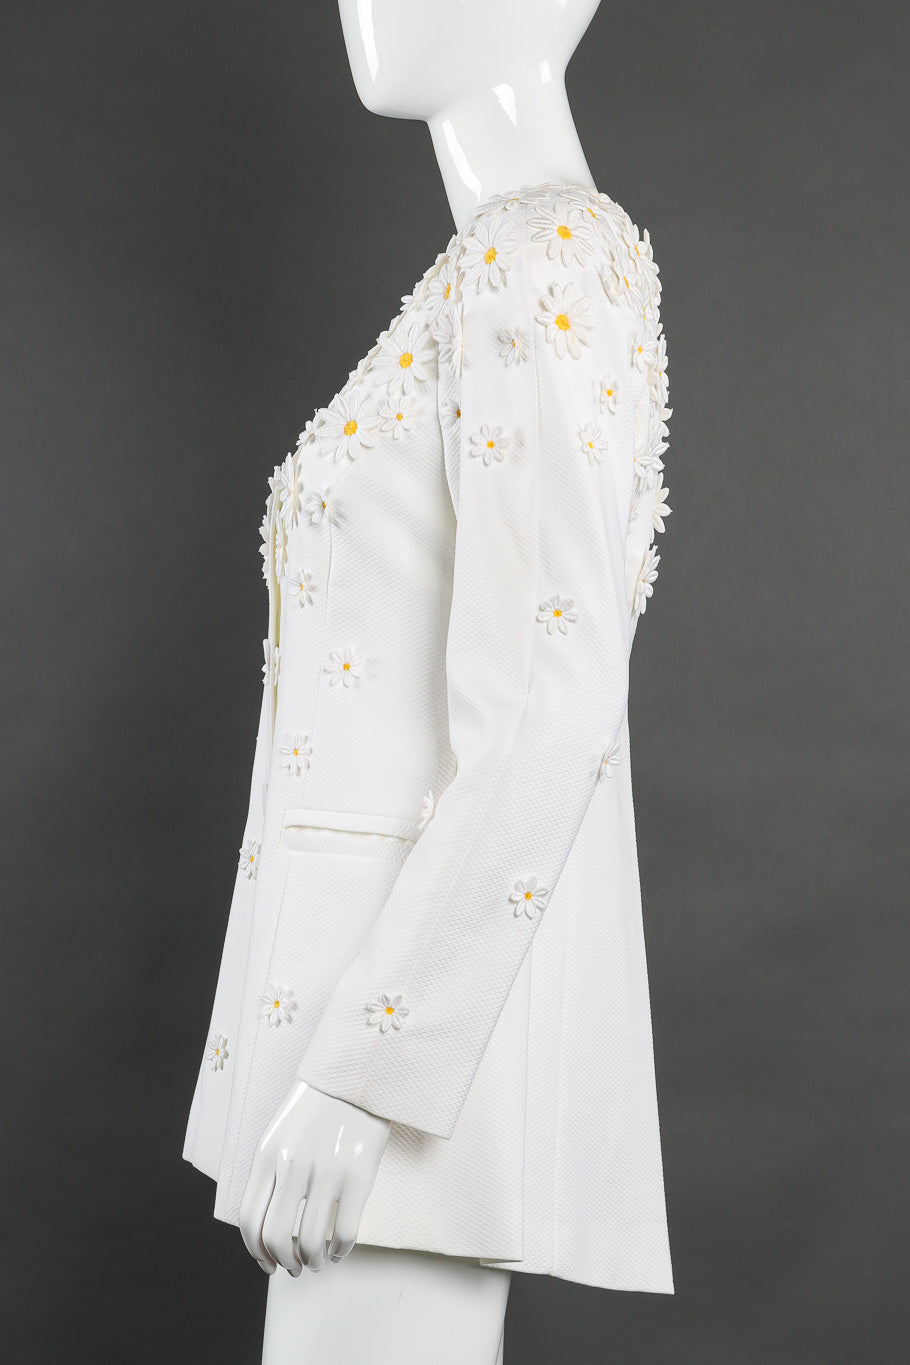 Daisy appliqué jacket by Lolita Lempicka on mannequin side @recessla